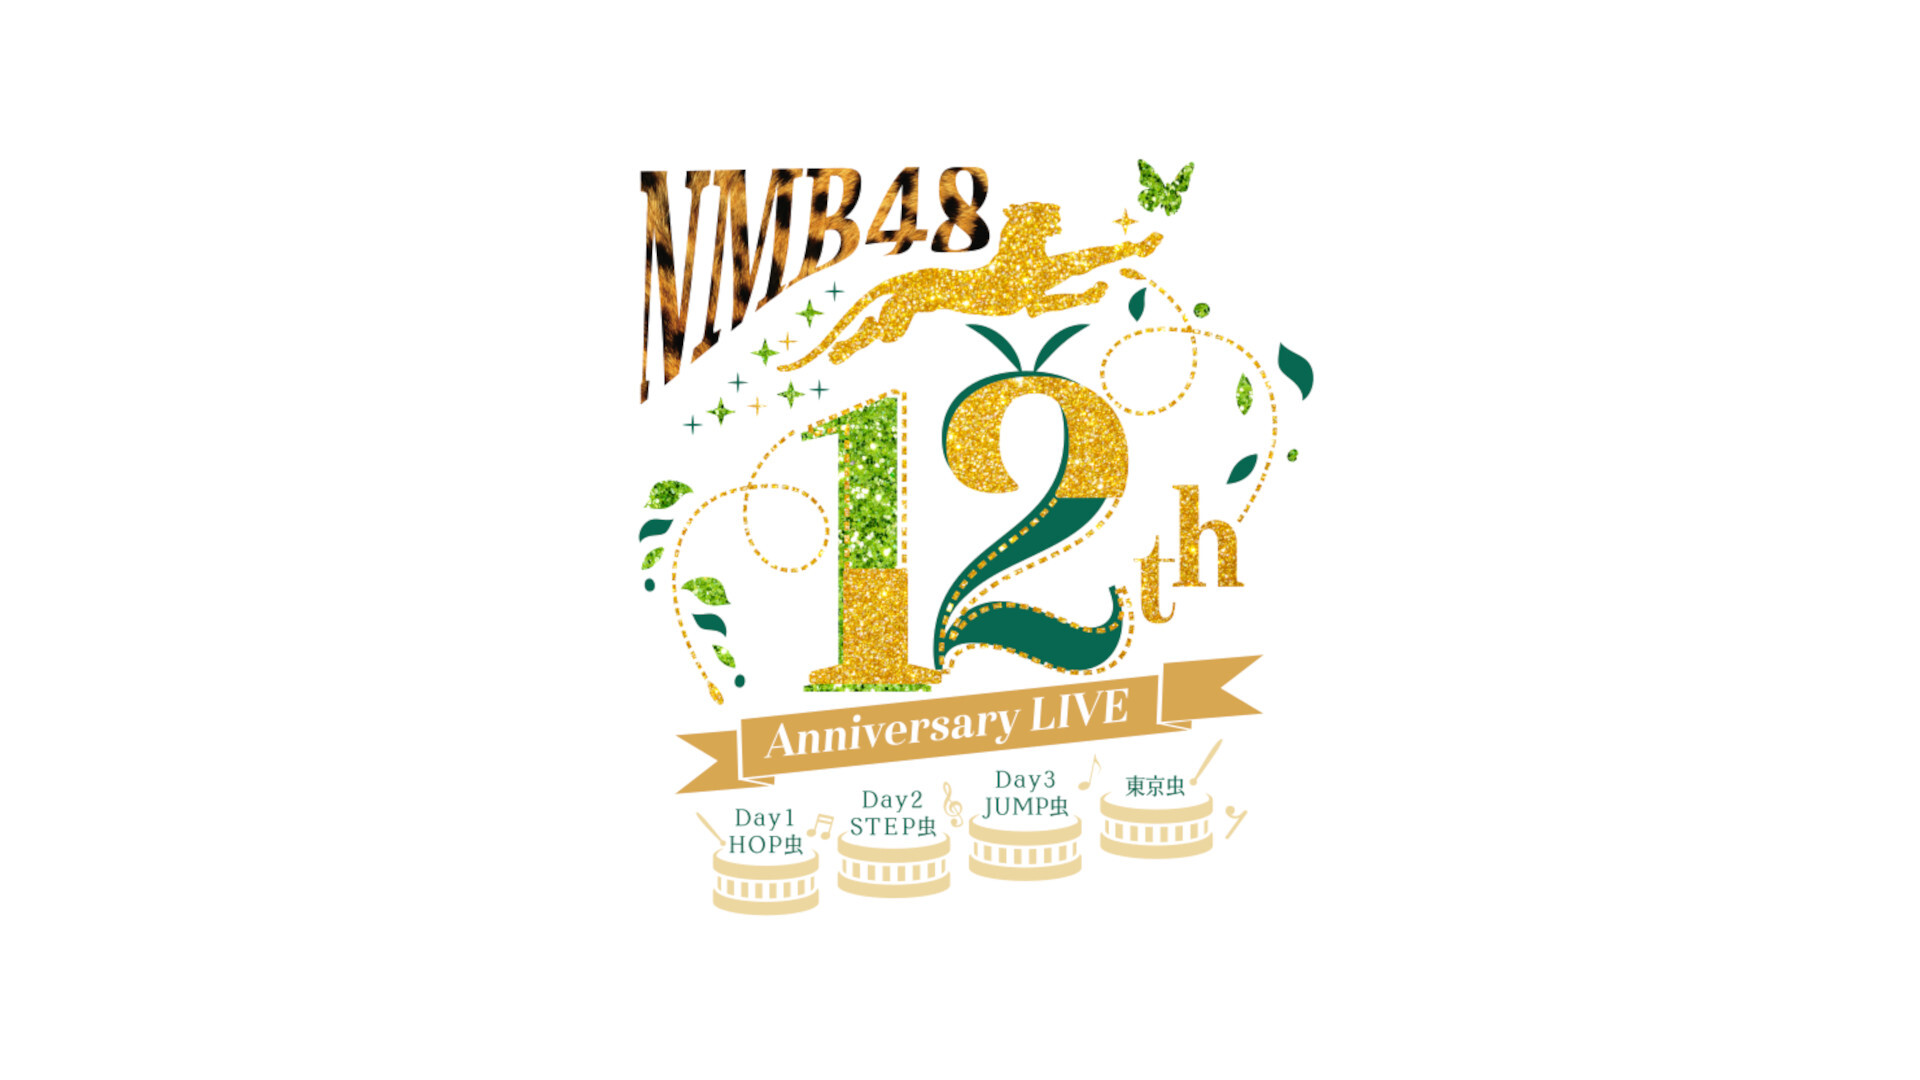 NMB48 12th Anniversary LIVE Day2 STEP虫